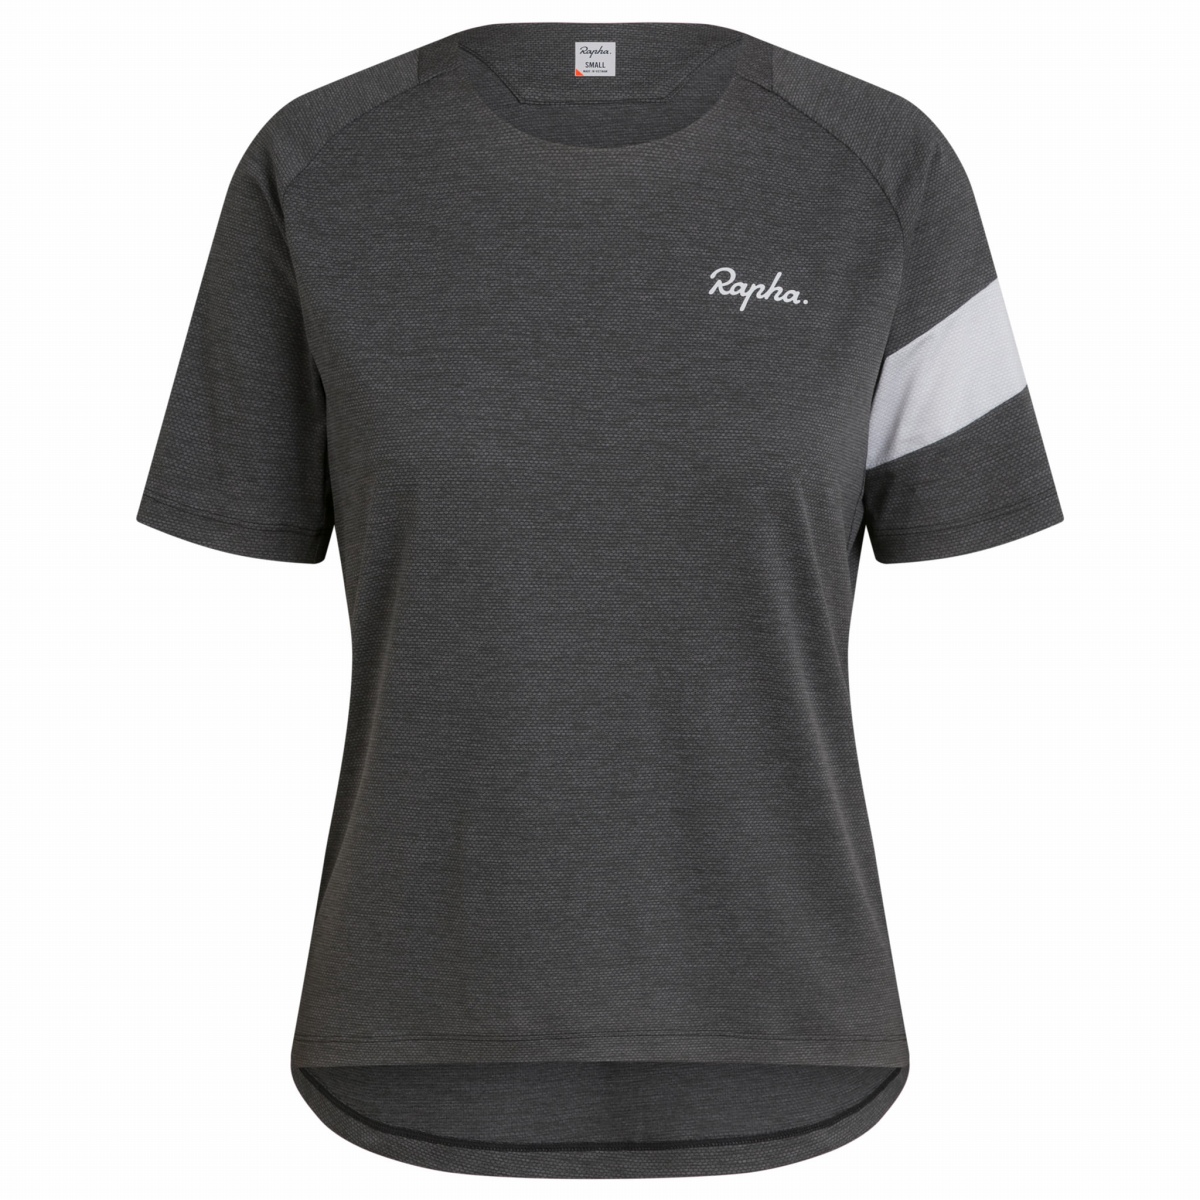 Rapha Women's Trail Technical T-Shirt（Dark Grey / Light Grey）